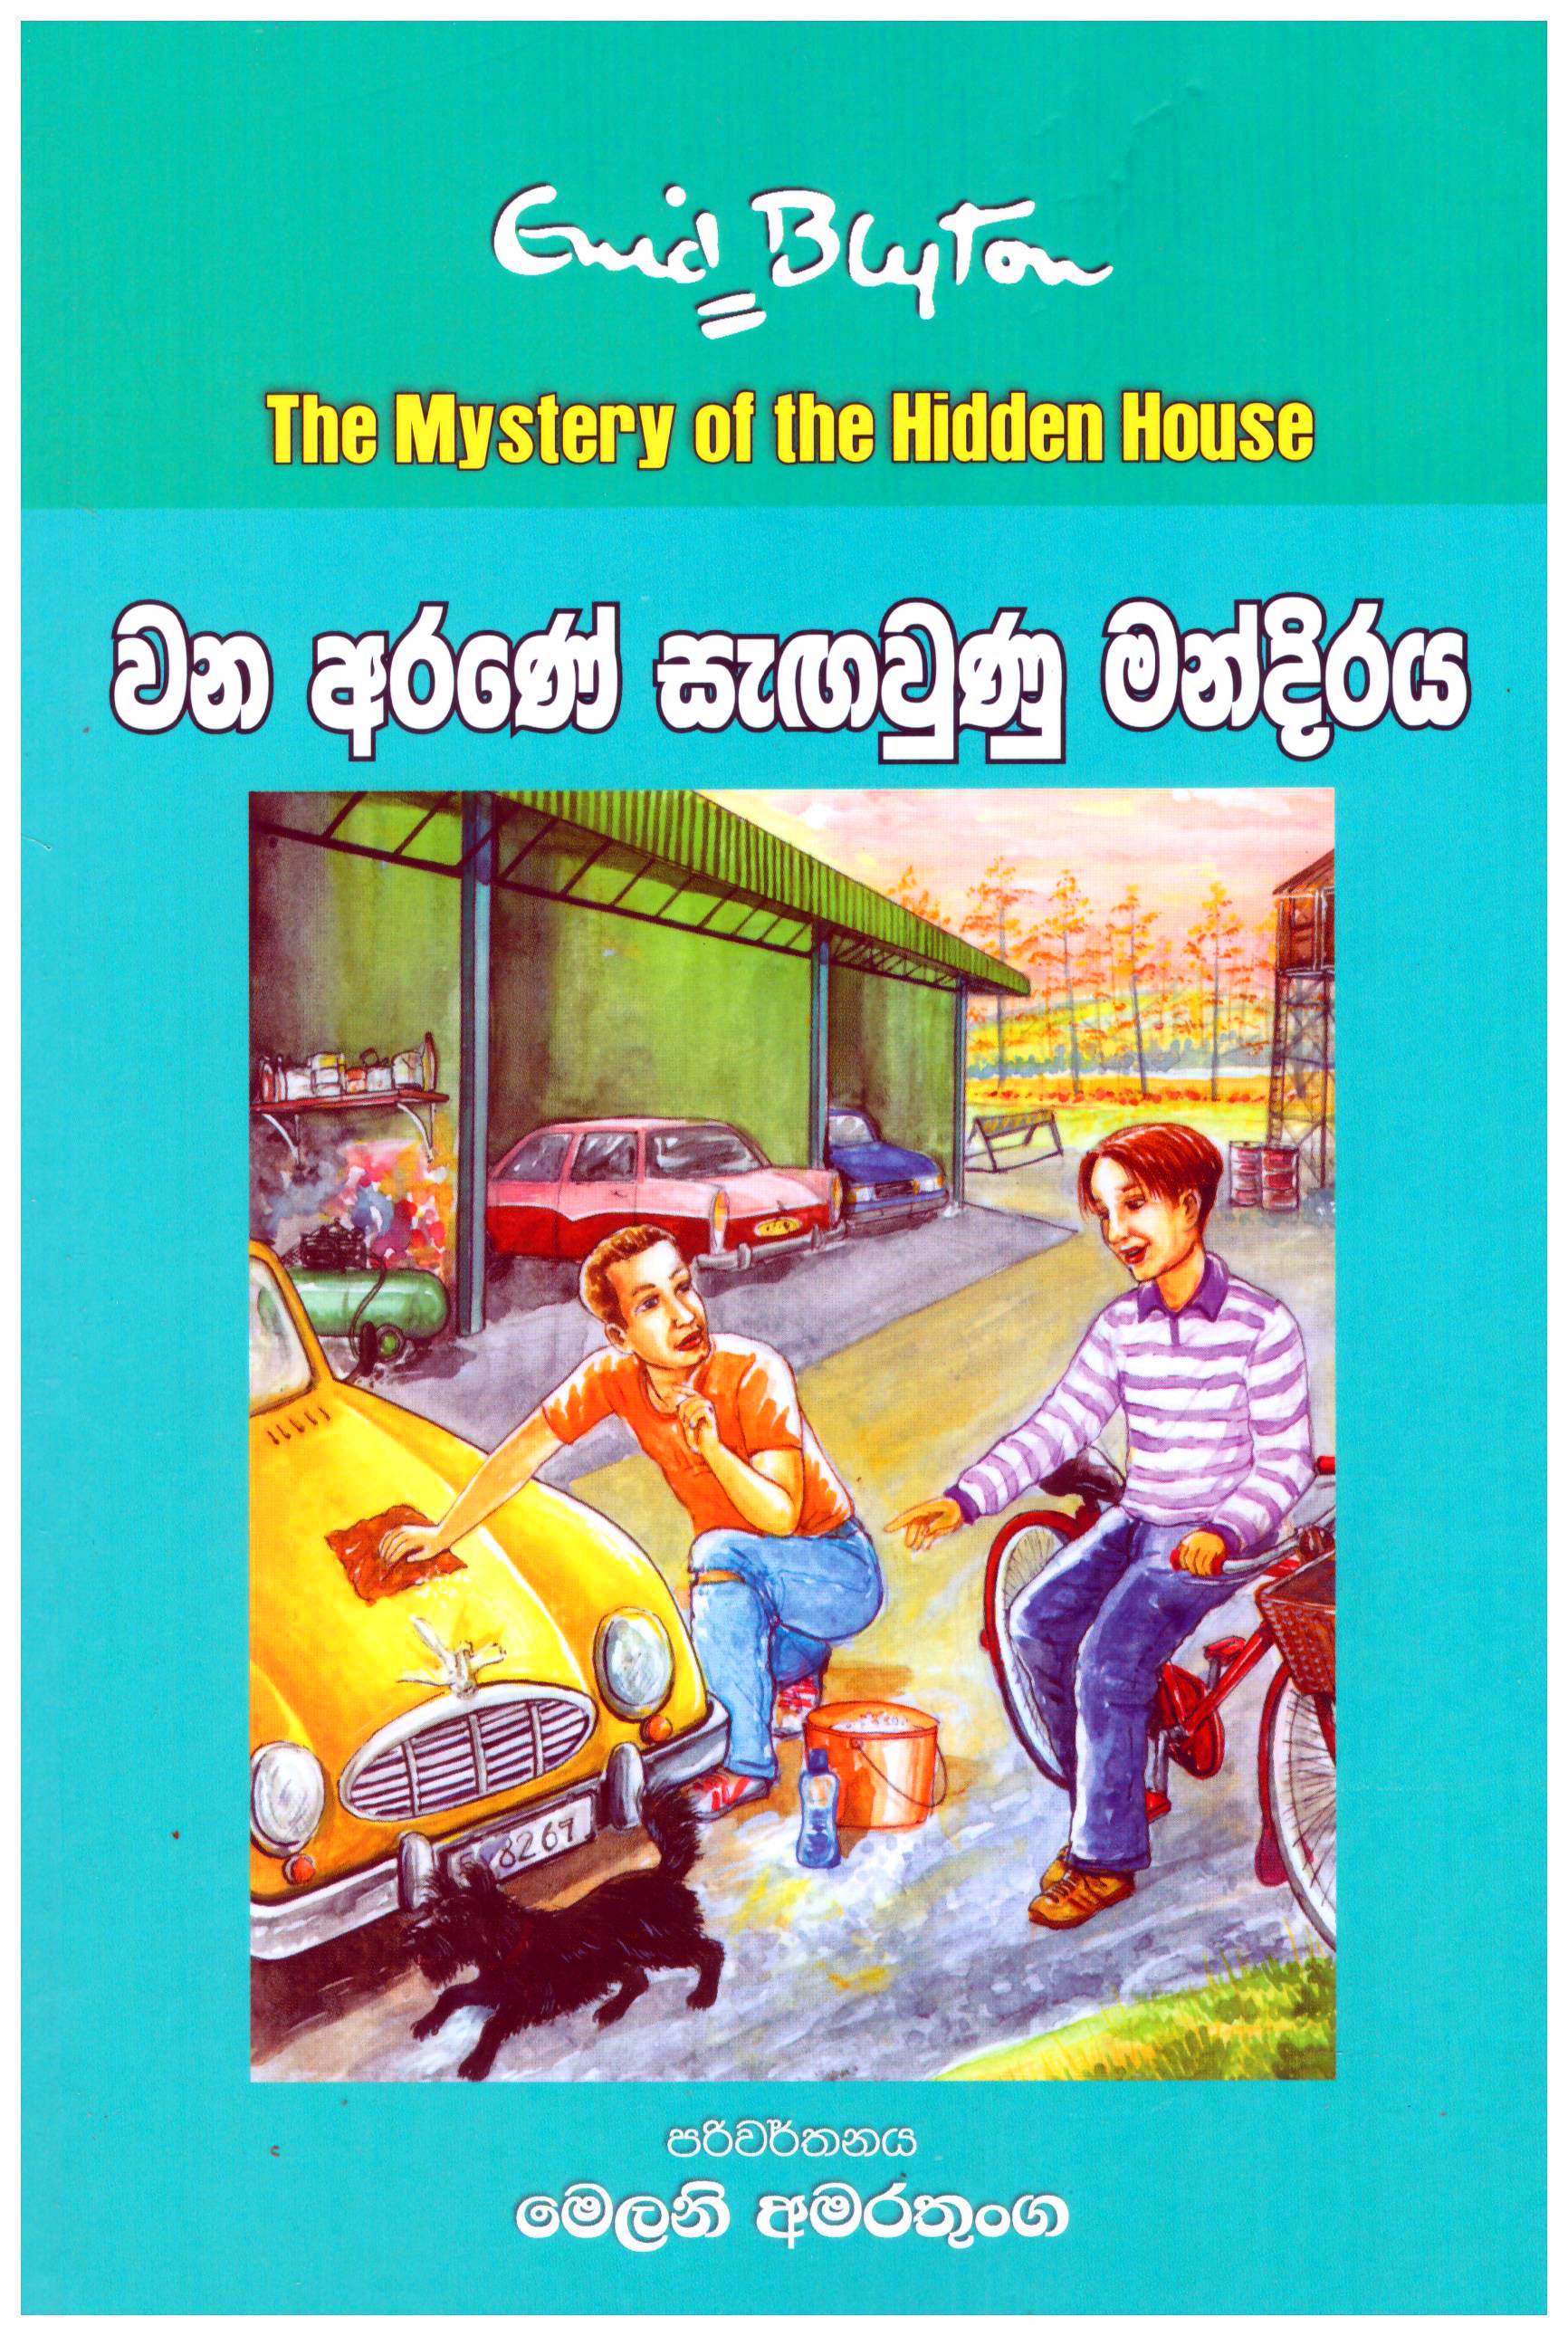 Wana Arane Segaunu Mandiraya - Translation of The Mystery of The Hidden House by Enid Blyton